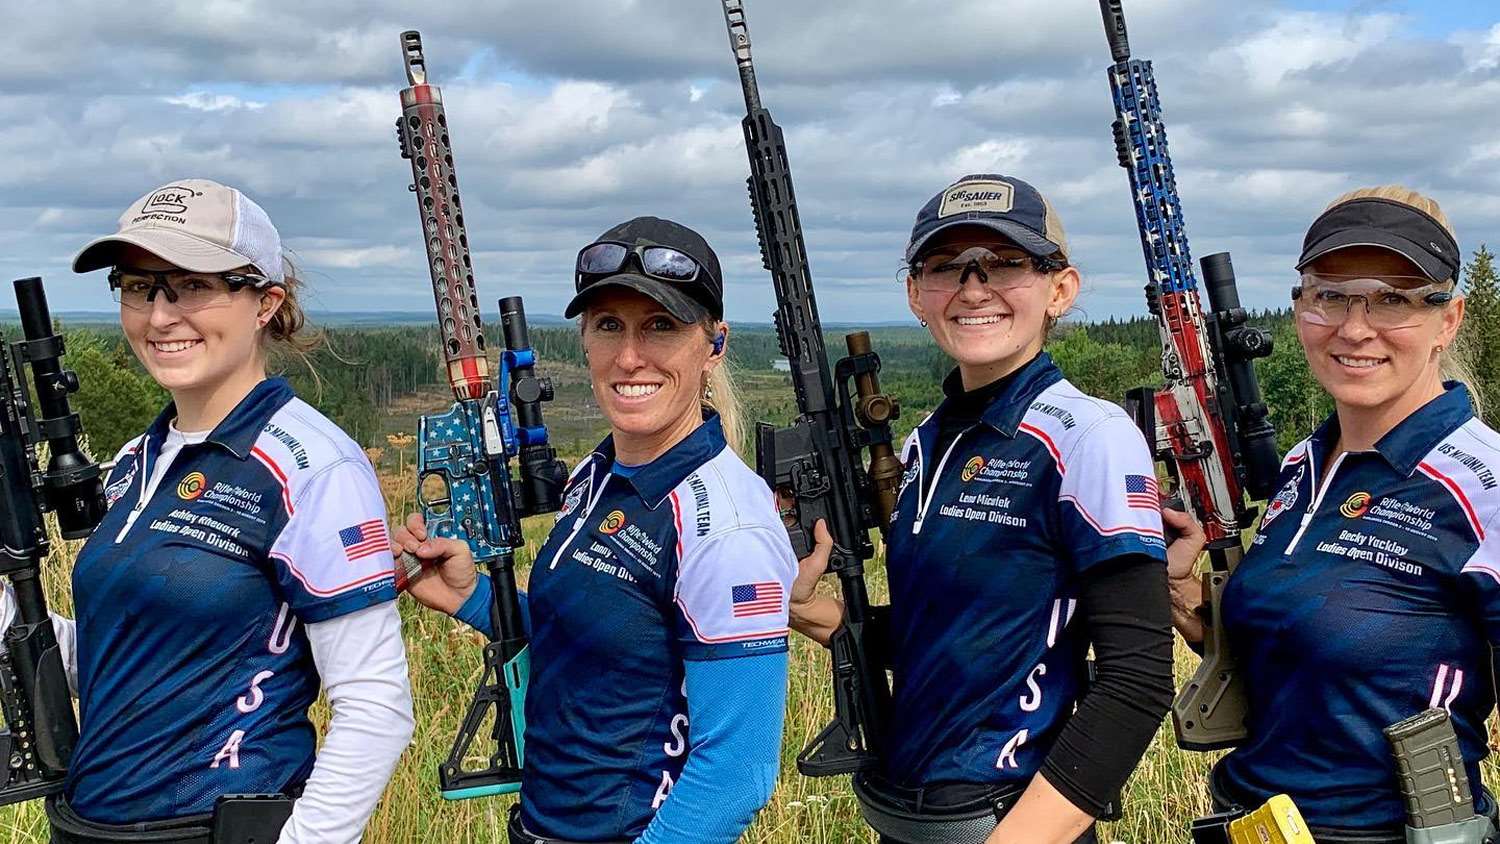 2019 U.S. Rifle Ladies Dominate In Sweden At IPSC Championship